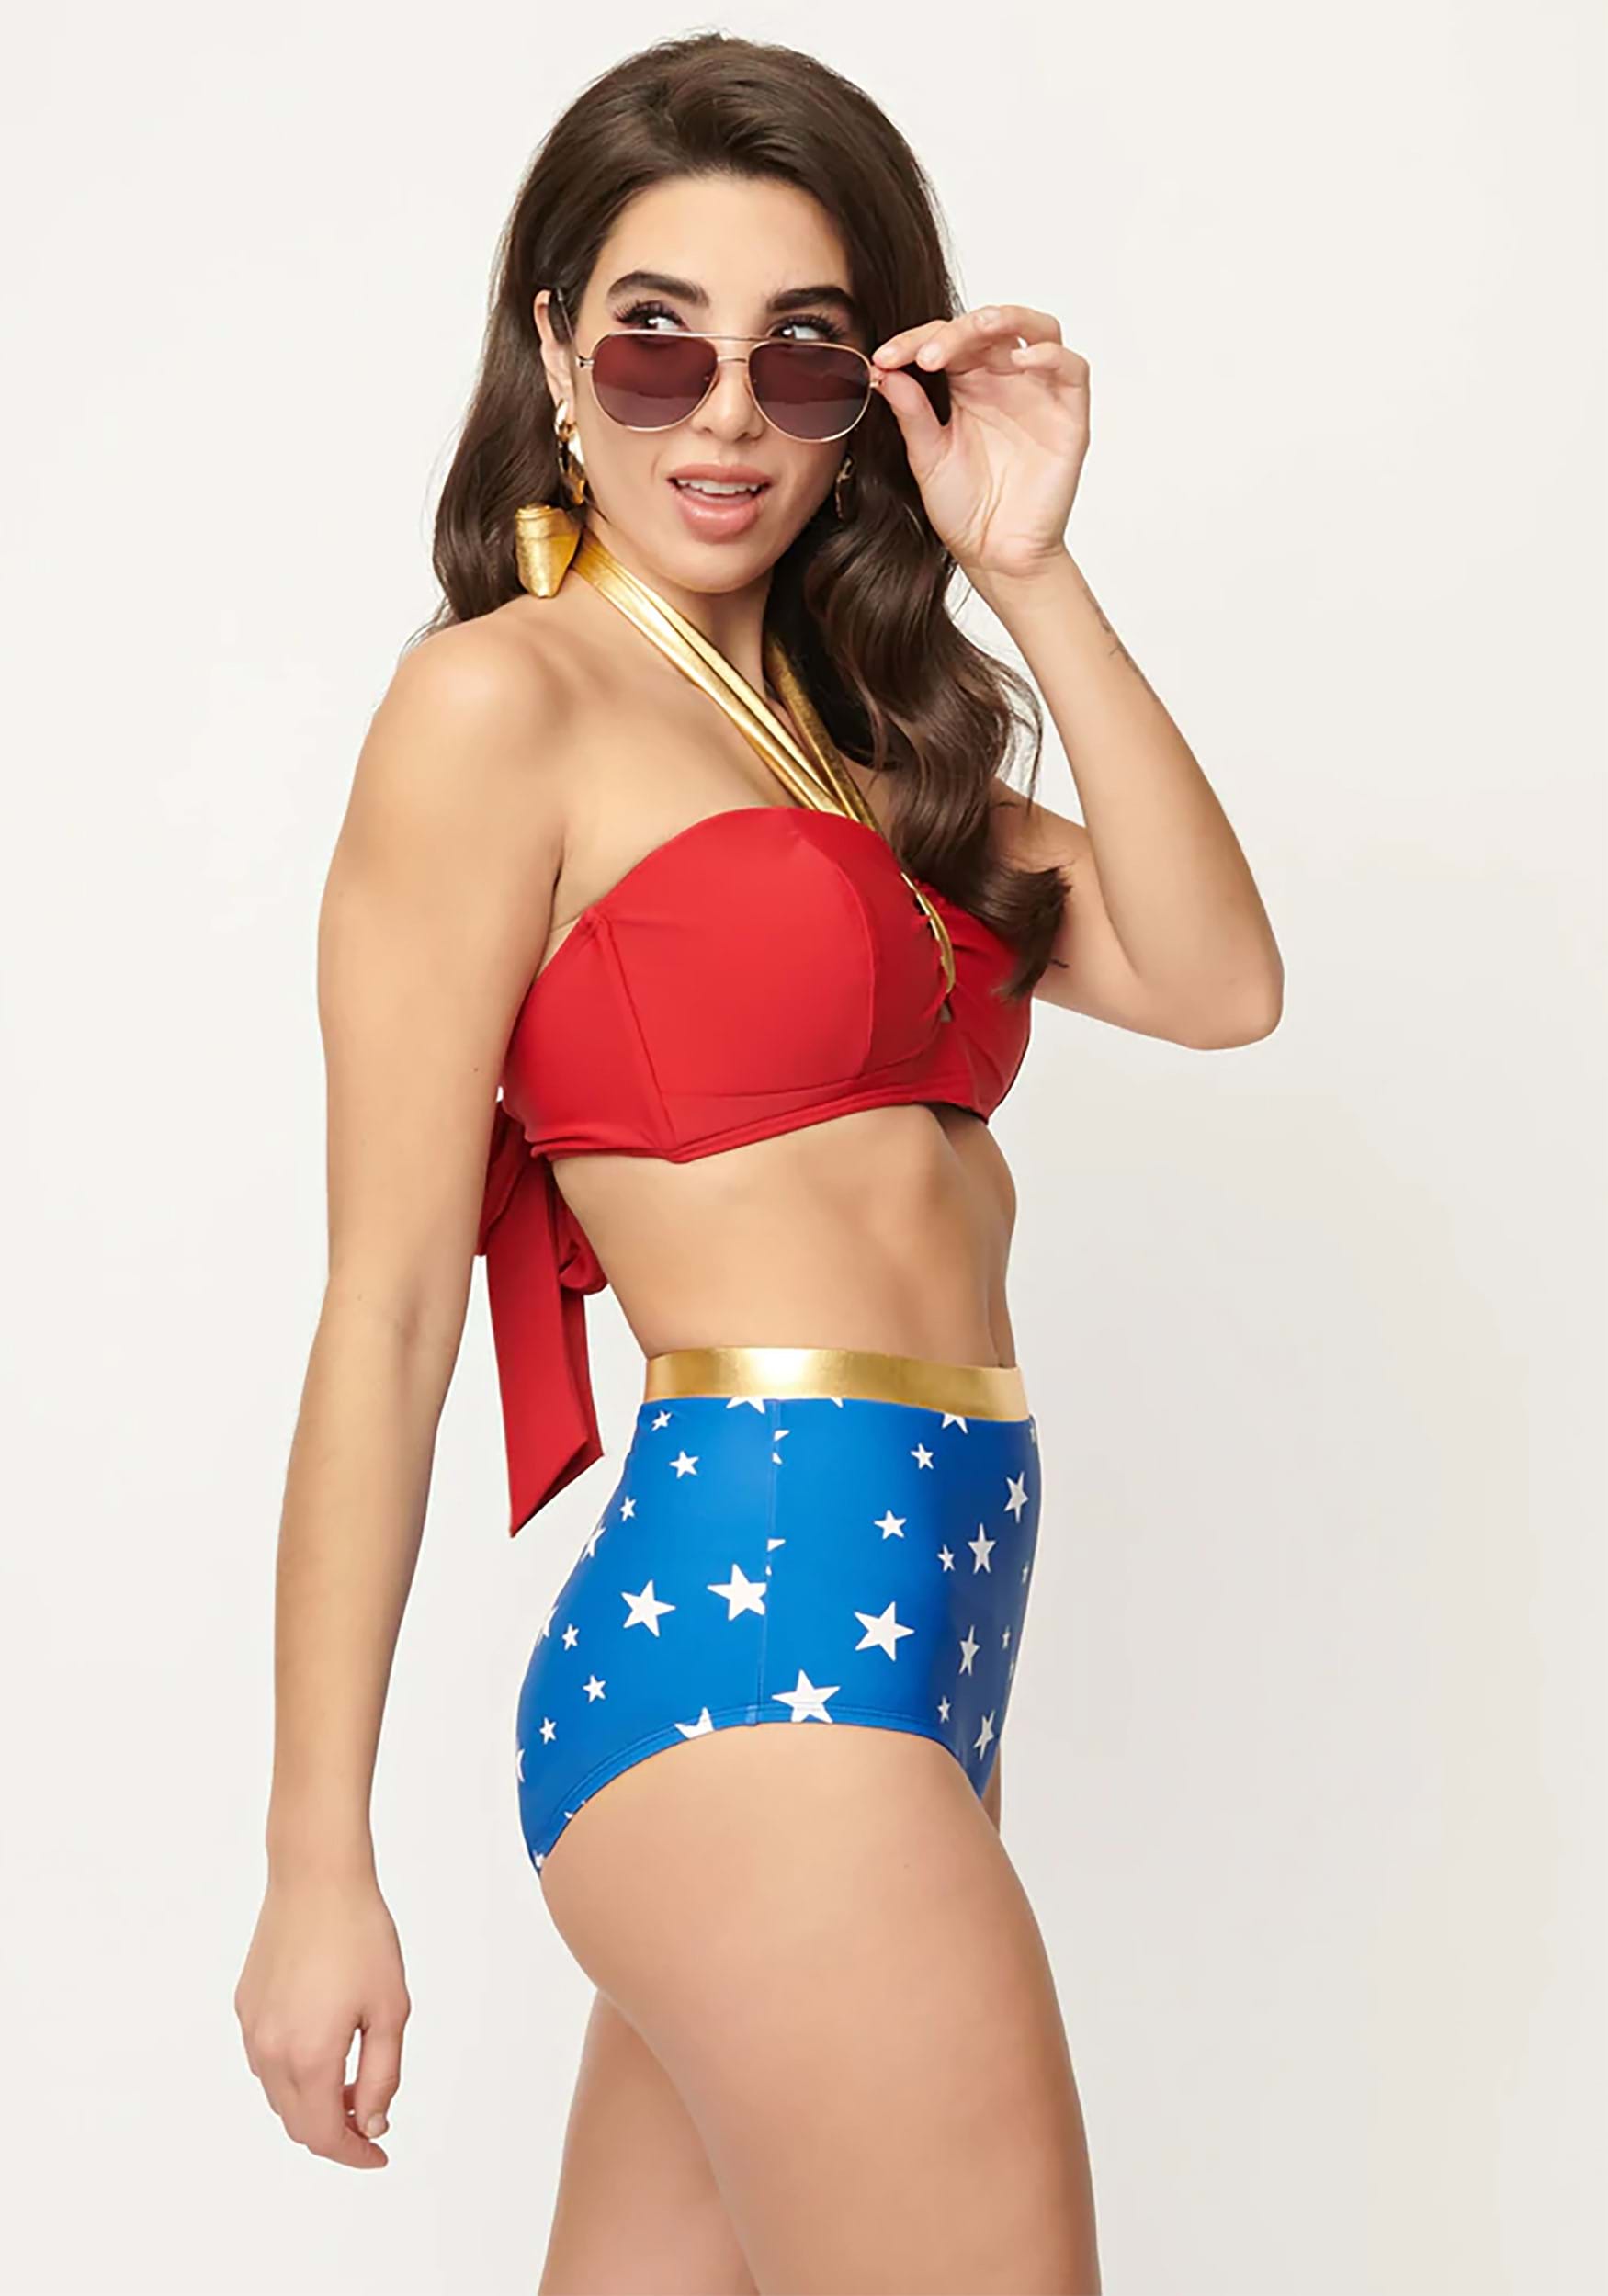 OpenDream - Wonder Woman in a blue bikini